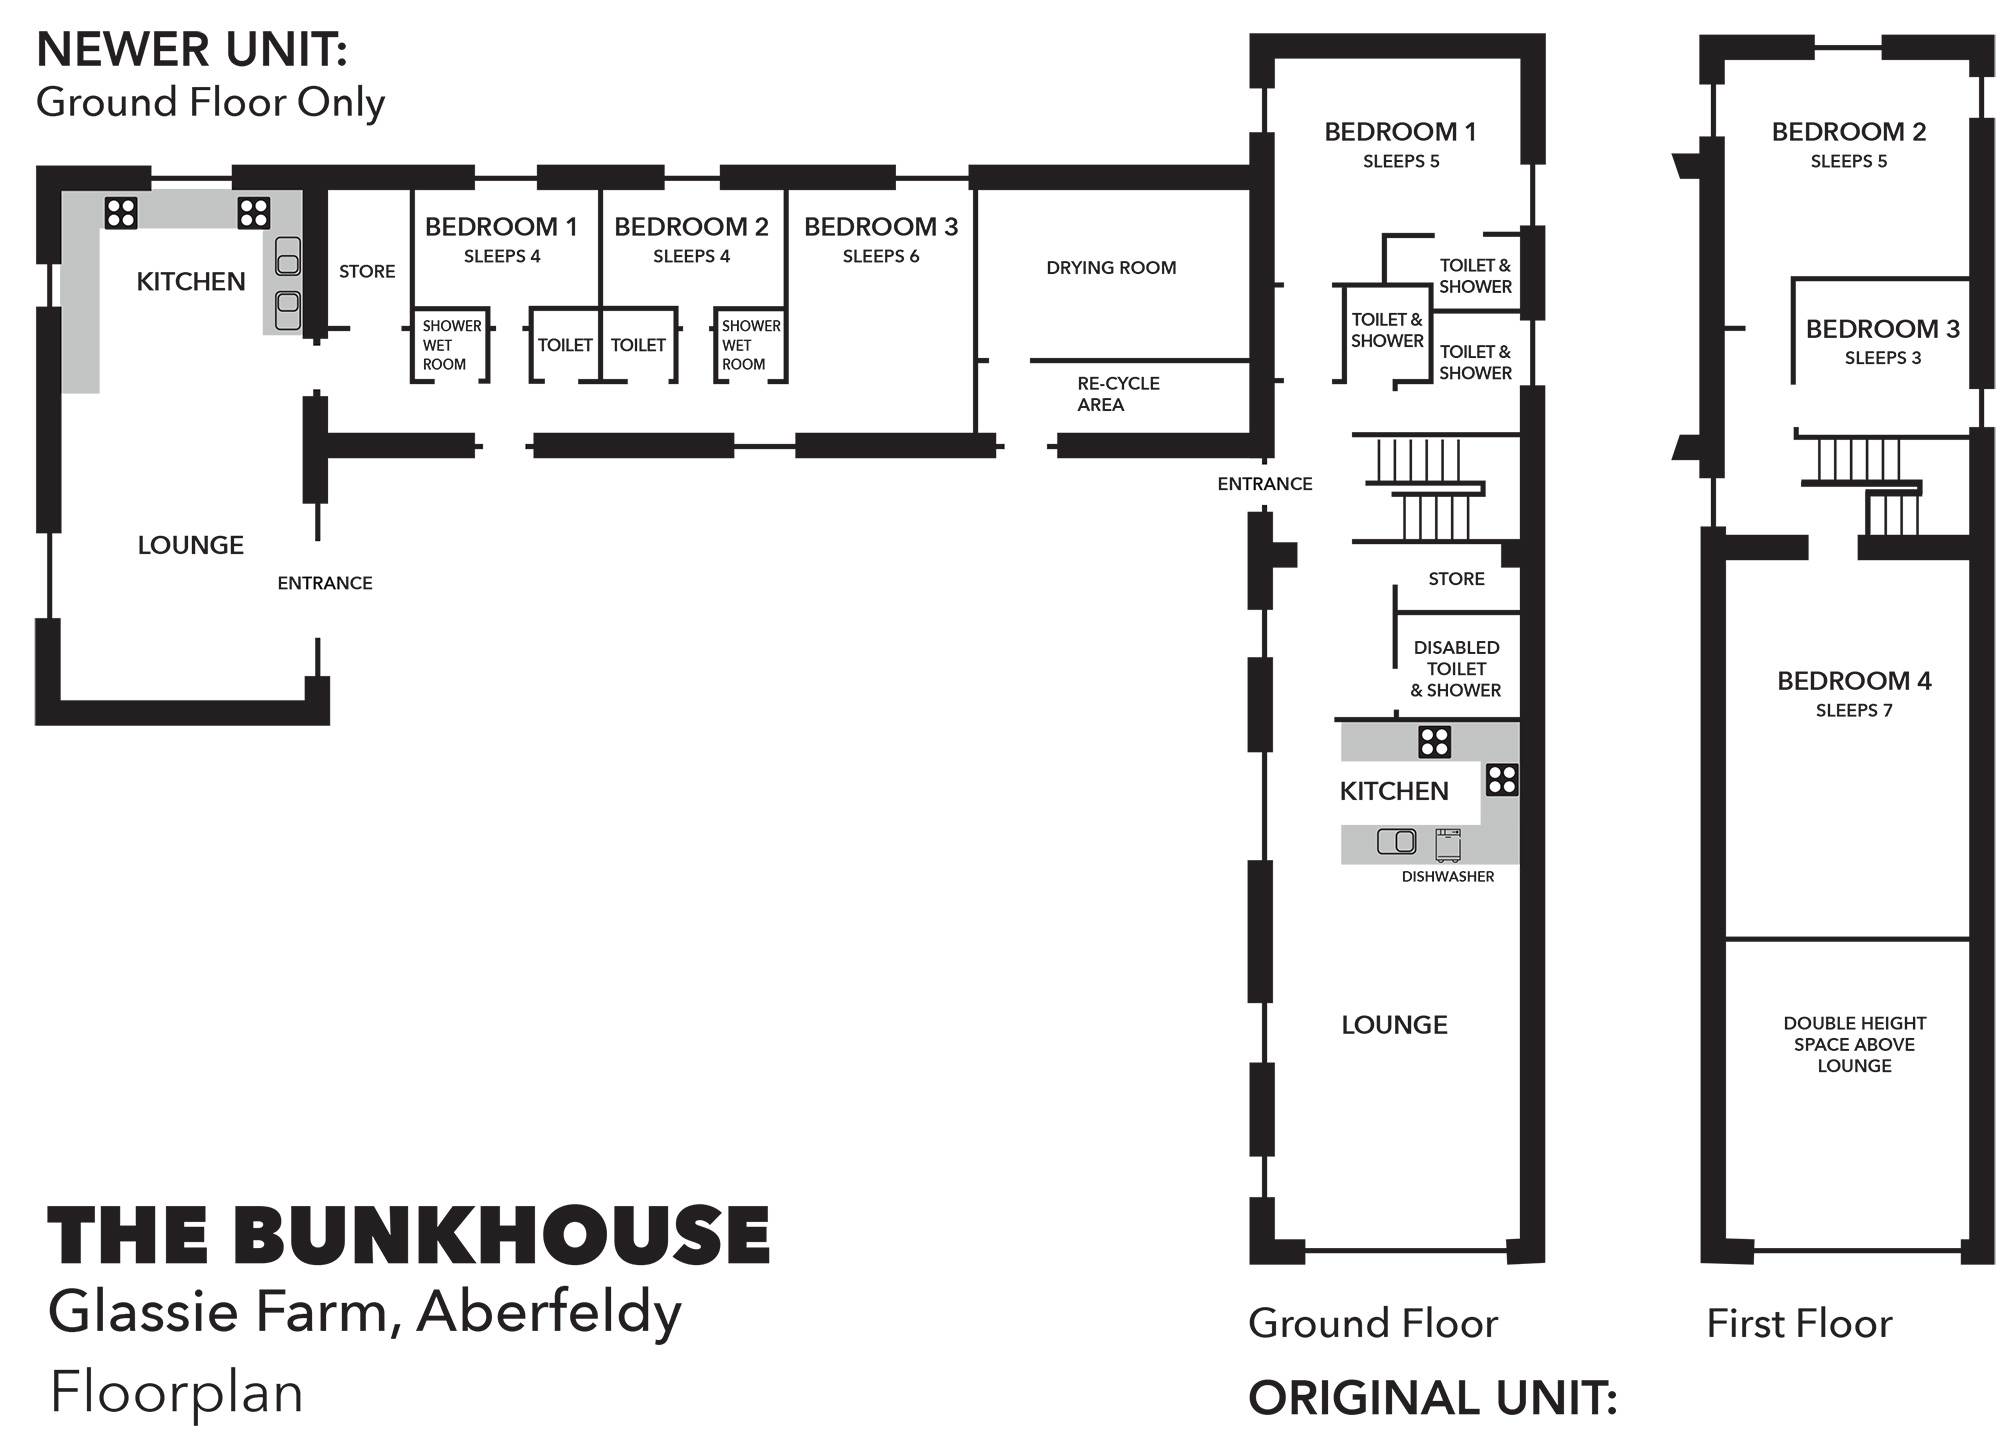 Floorplan of Bunkhouses